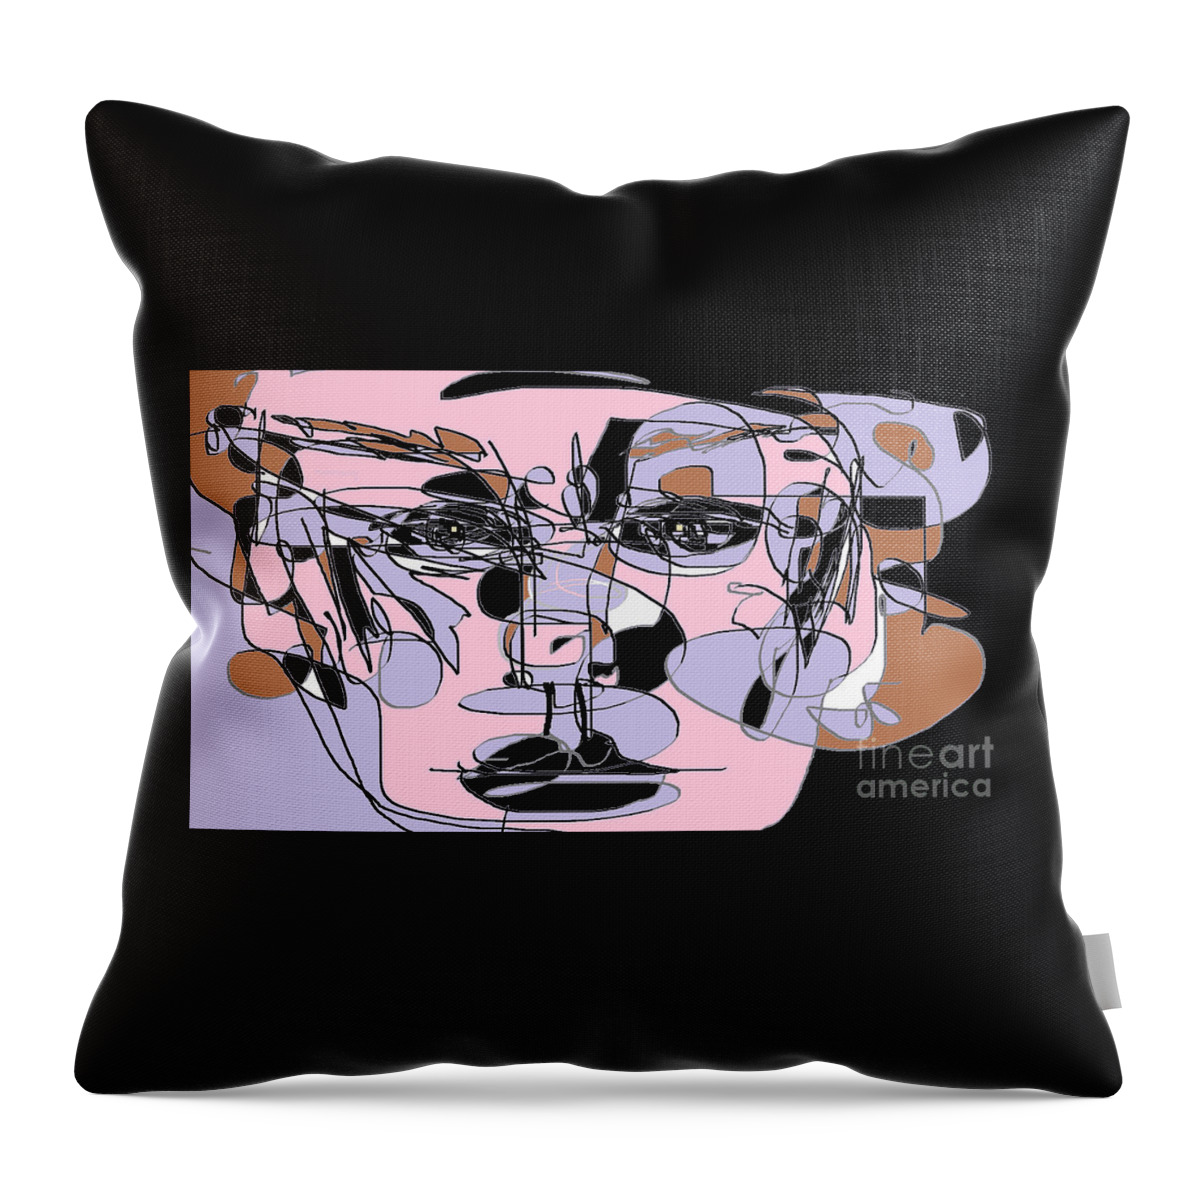 Digital Art Throw Pillow featuring the digital art Courage by Nancy Kane Chapman